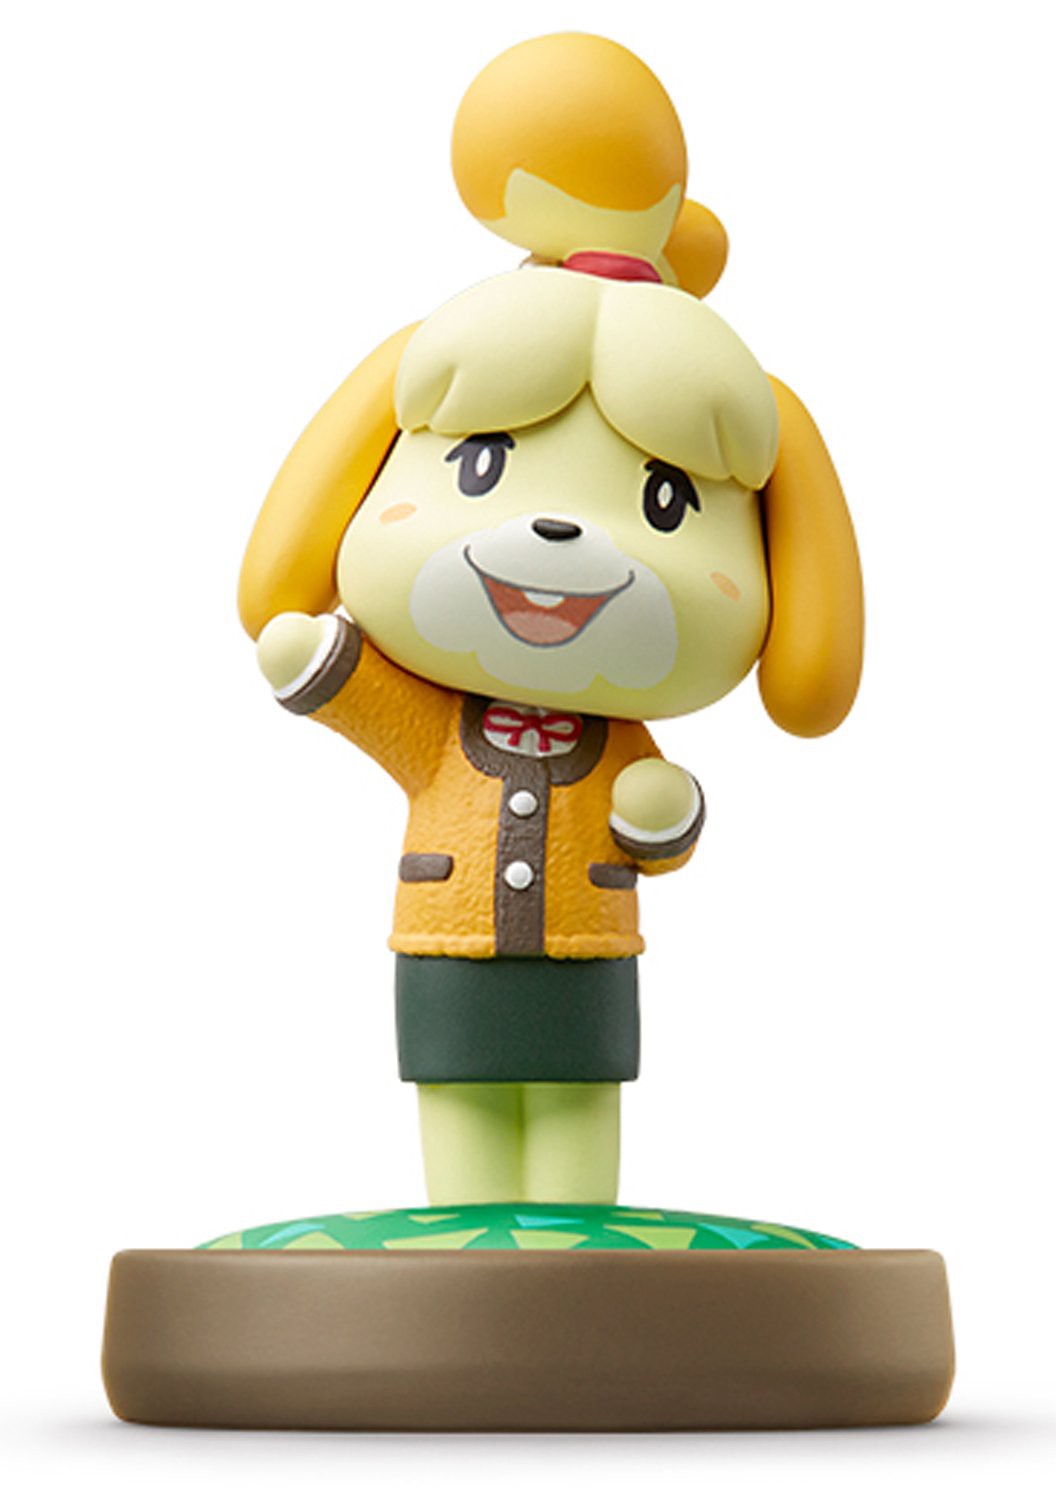 amiibo Animal Crossing Series Figure (Fuko) for Wii U, New Nintendo 3DS,  New Nintendo 3DS LL / XL